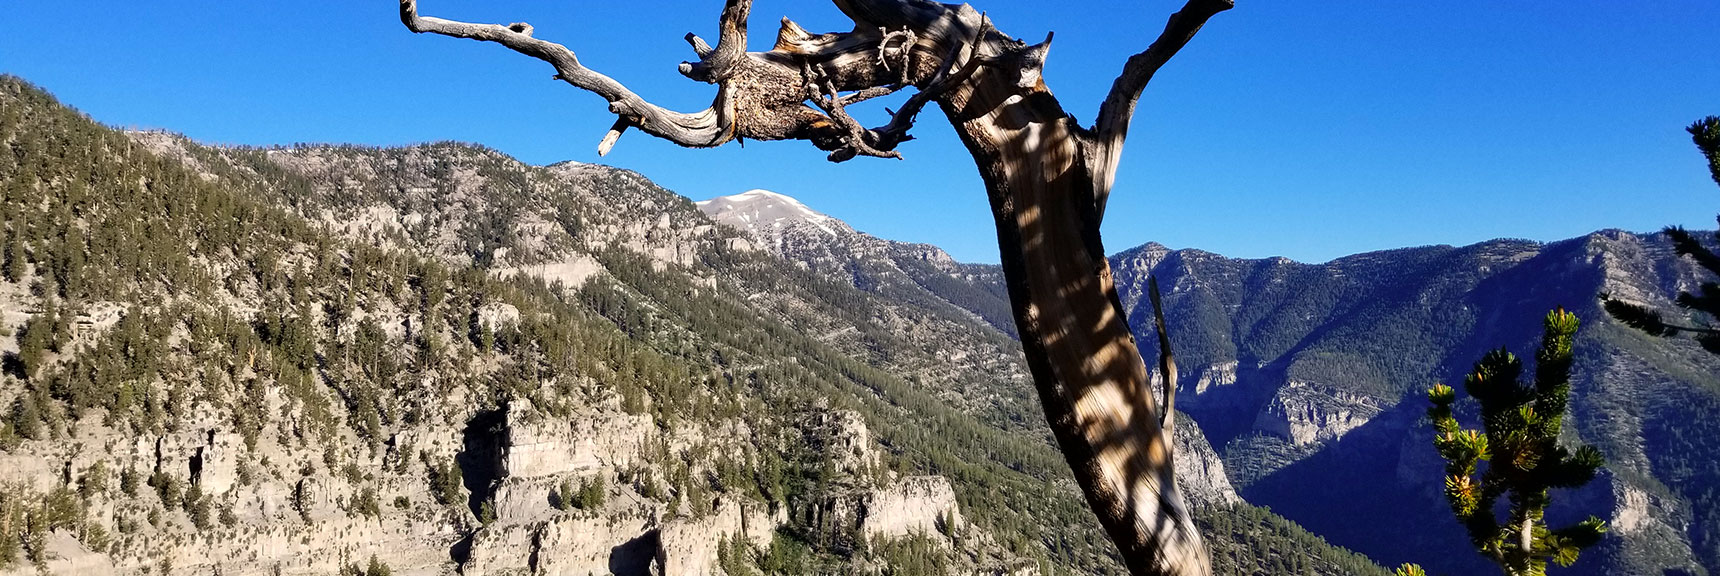 Ribbon-shaped Bristlecone Pine Tree Trunk Framing Mt. Charleston, Nevada